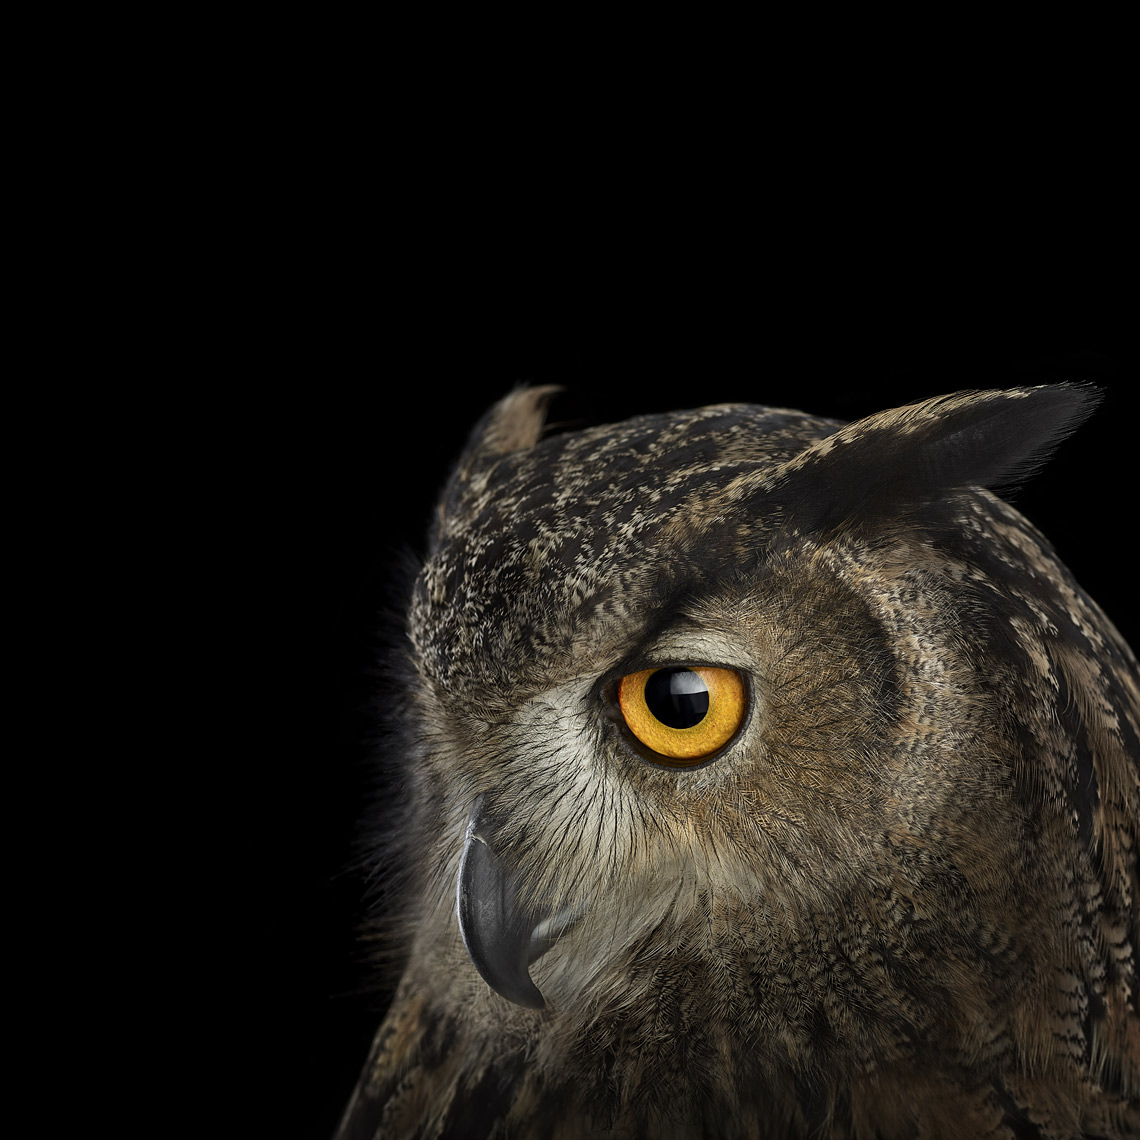 Eurasian eagle owl profile portrait by fine art animal photographer Brad Wilson